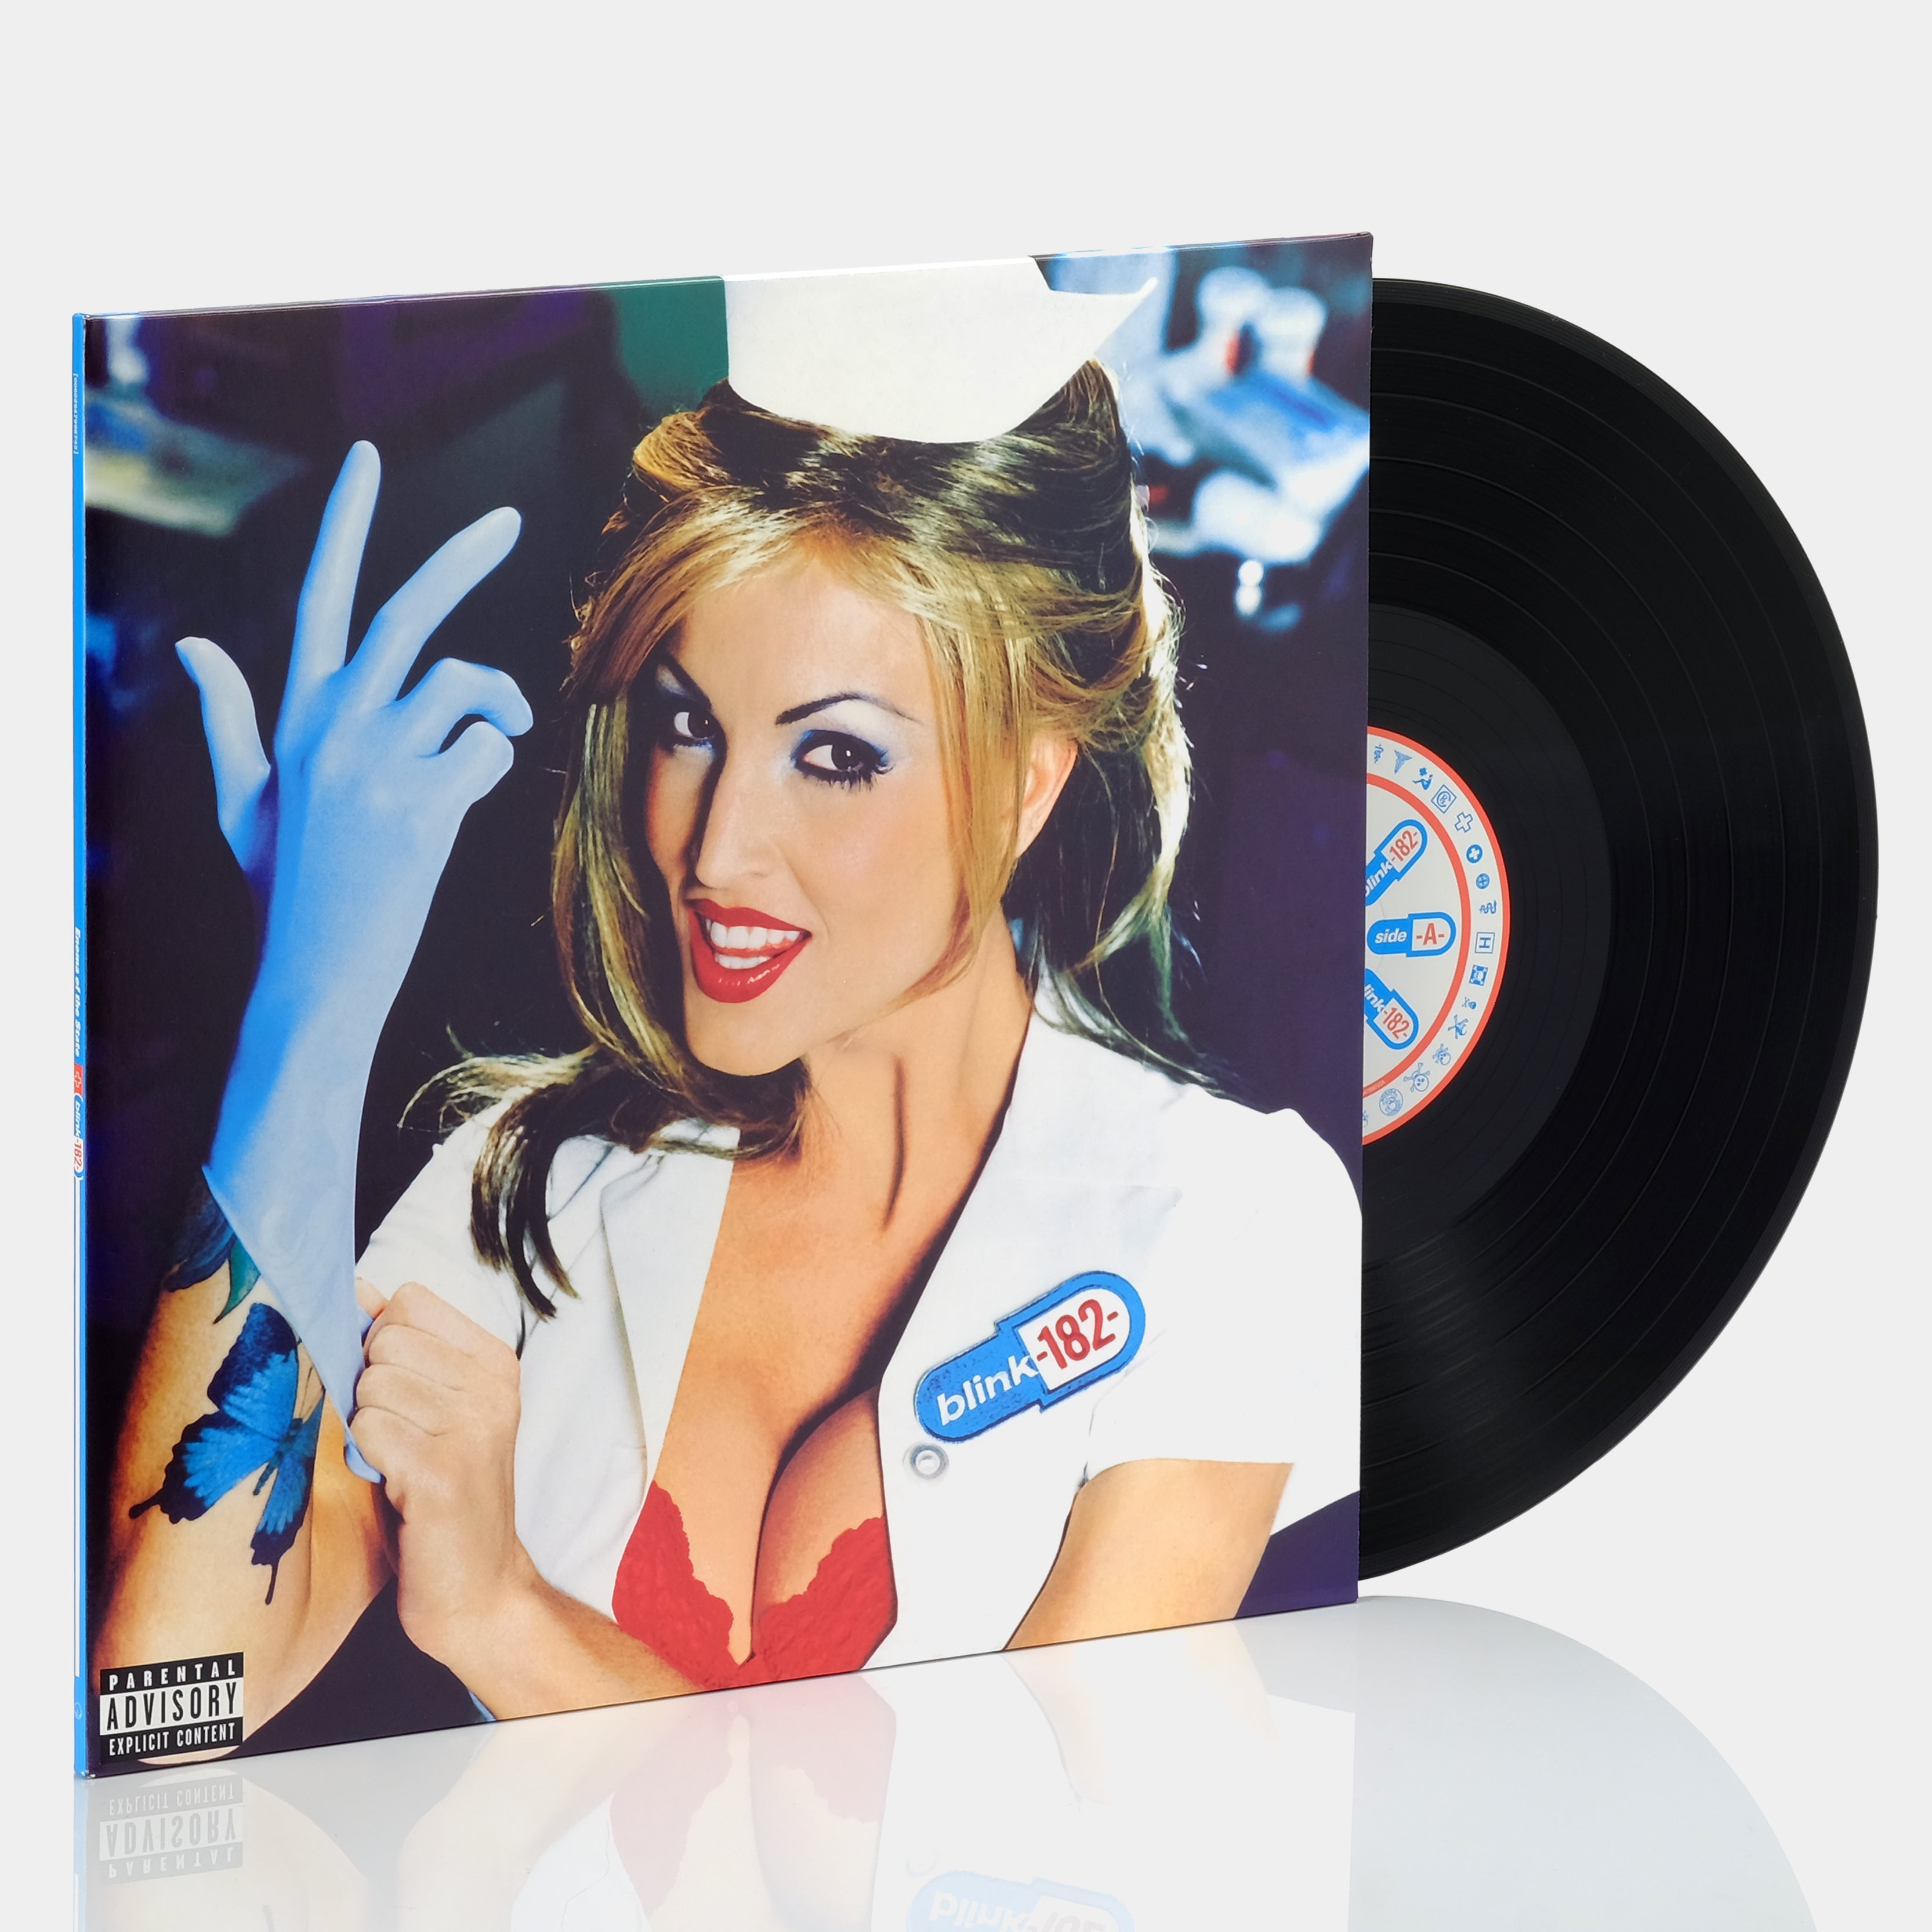 Blink-182 - Enema of the State LP Vinyl Record